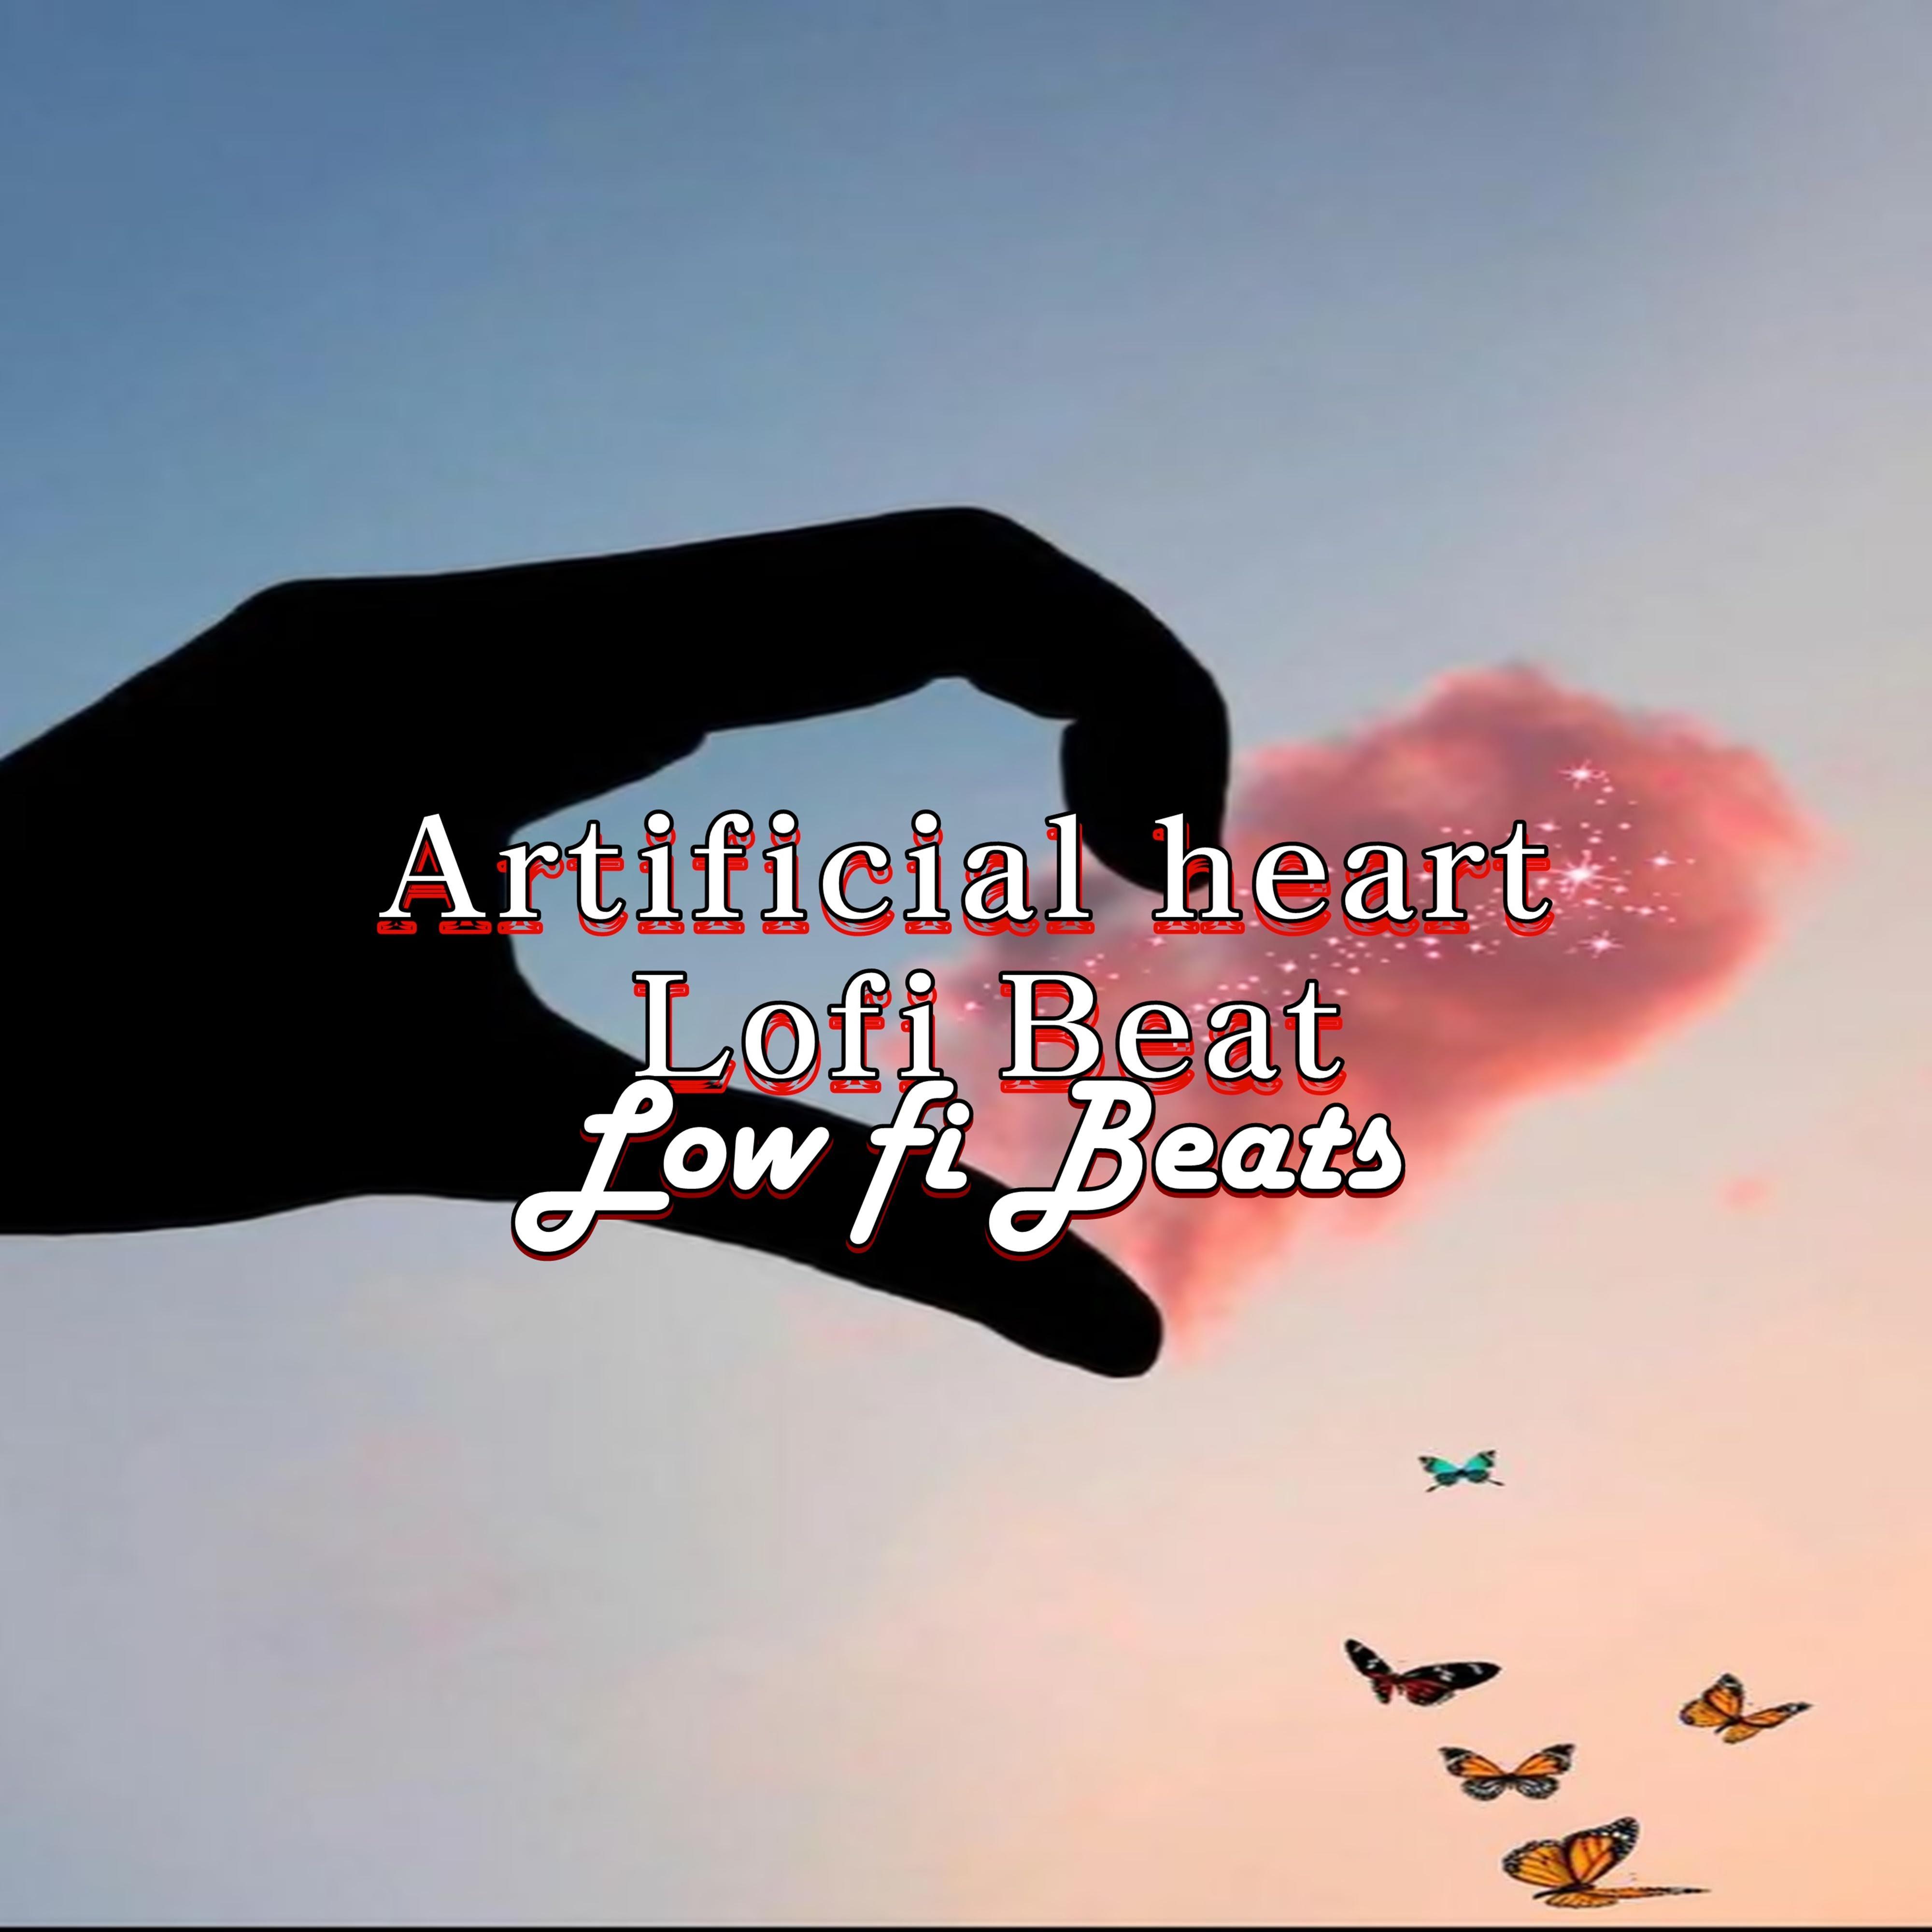 Lofi Hip Hop Edits - Alone and Afraid - Lofi Beat